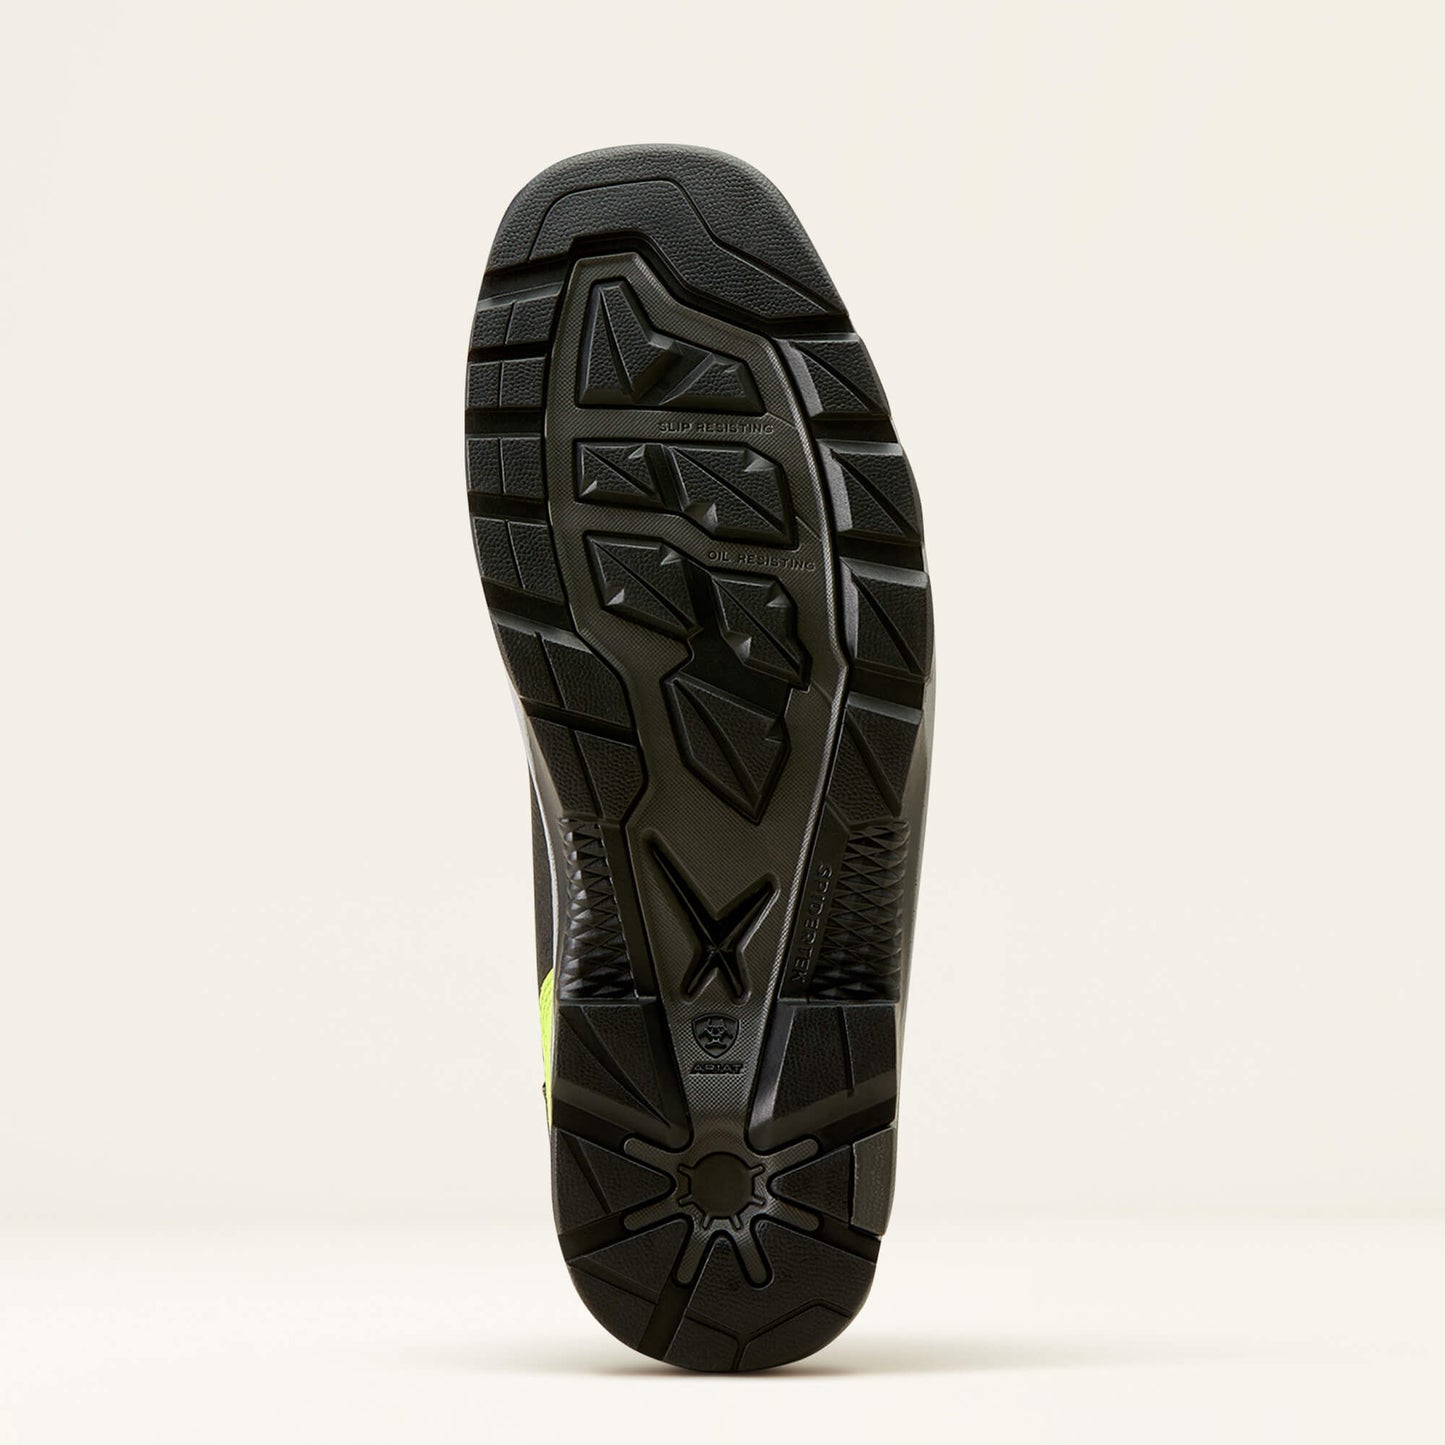 ARIAT MEN'S Style No. 10050829 Intrepid Live Wire Waterproof Composite Toe Work Boot